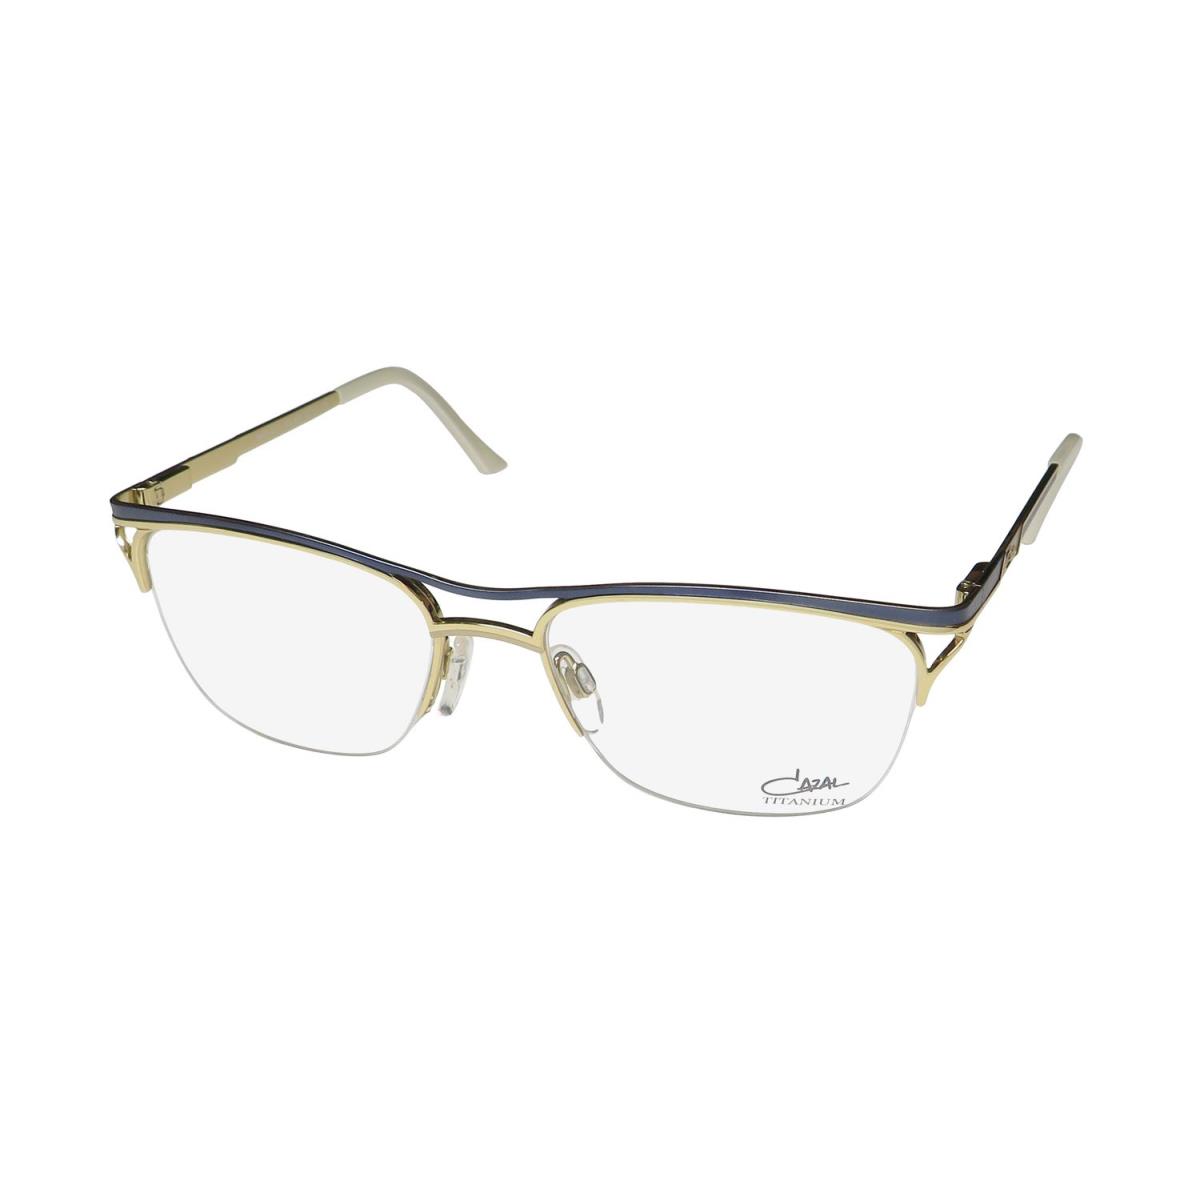 Cazal 4278 Titanium Half-rim Imported From Germany Rare Eyeglass Frame/glasses Gold / Blue